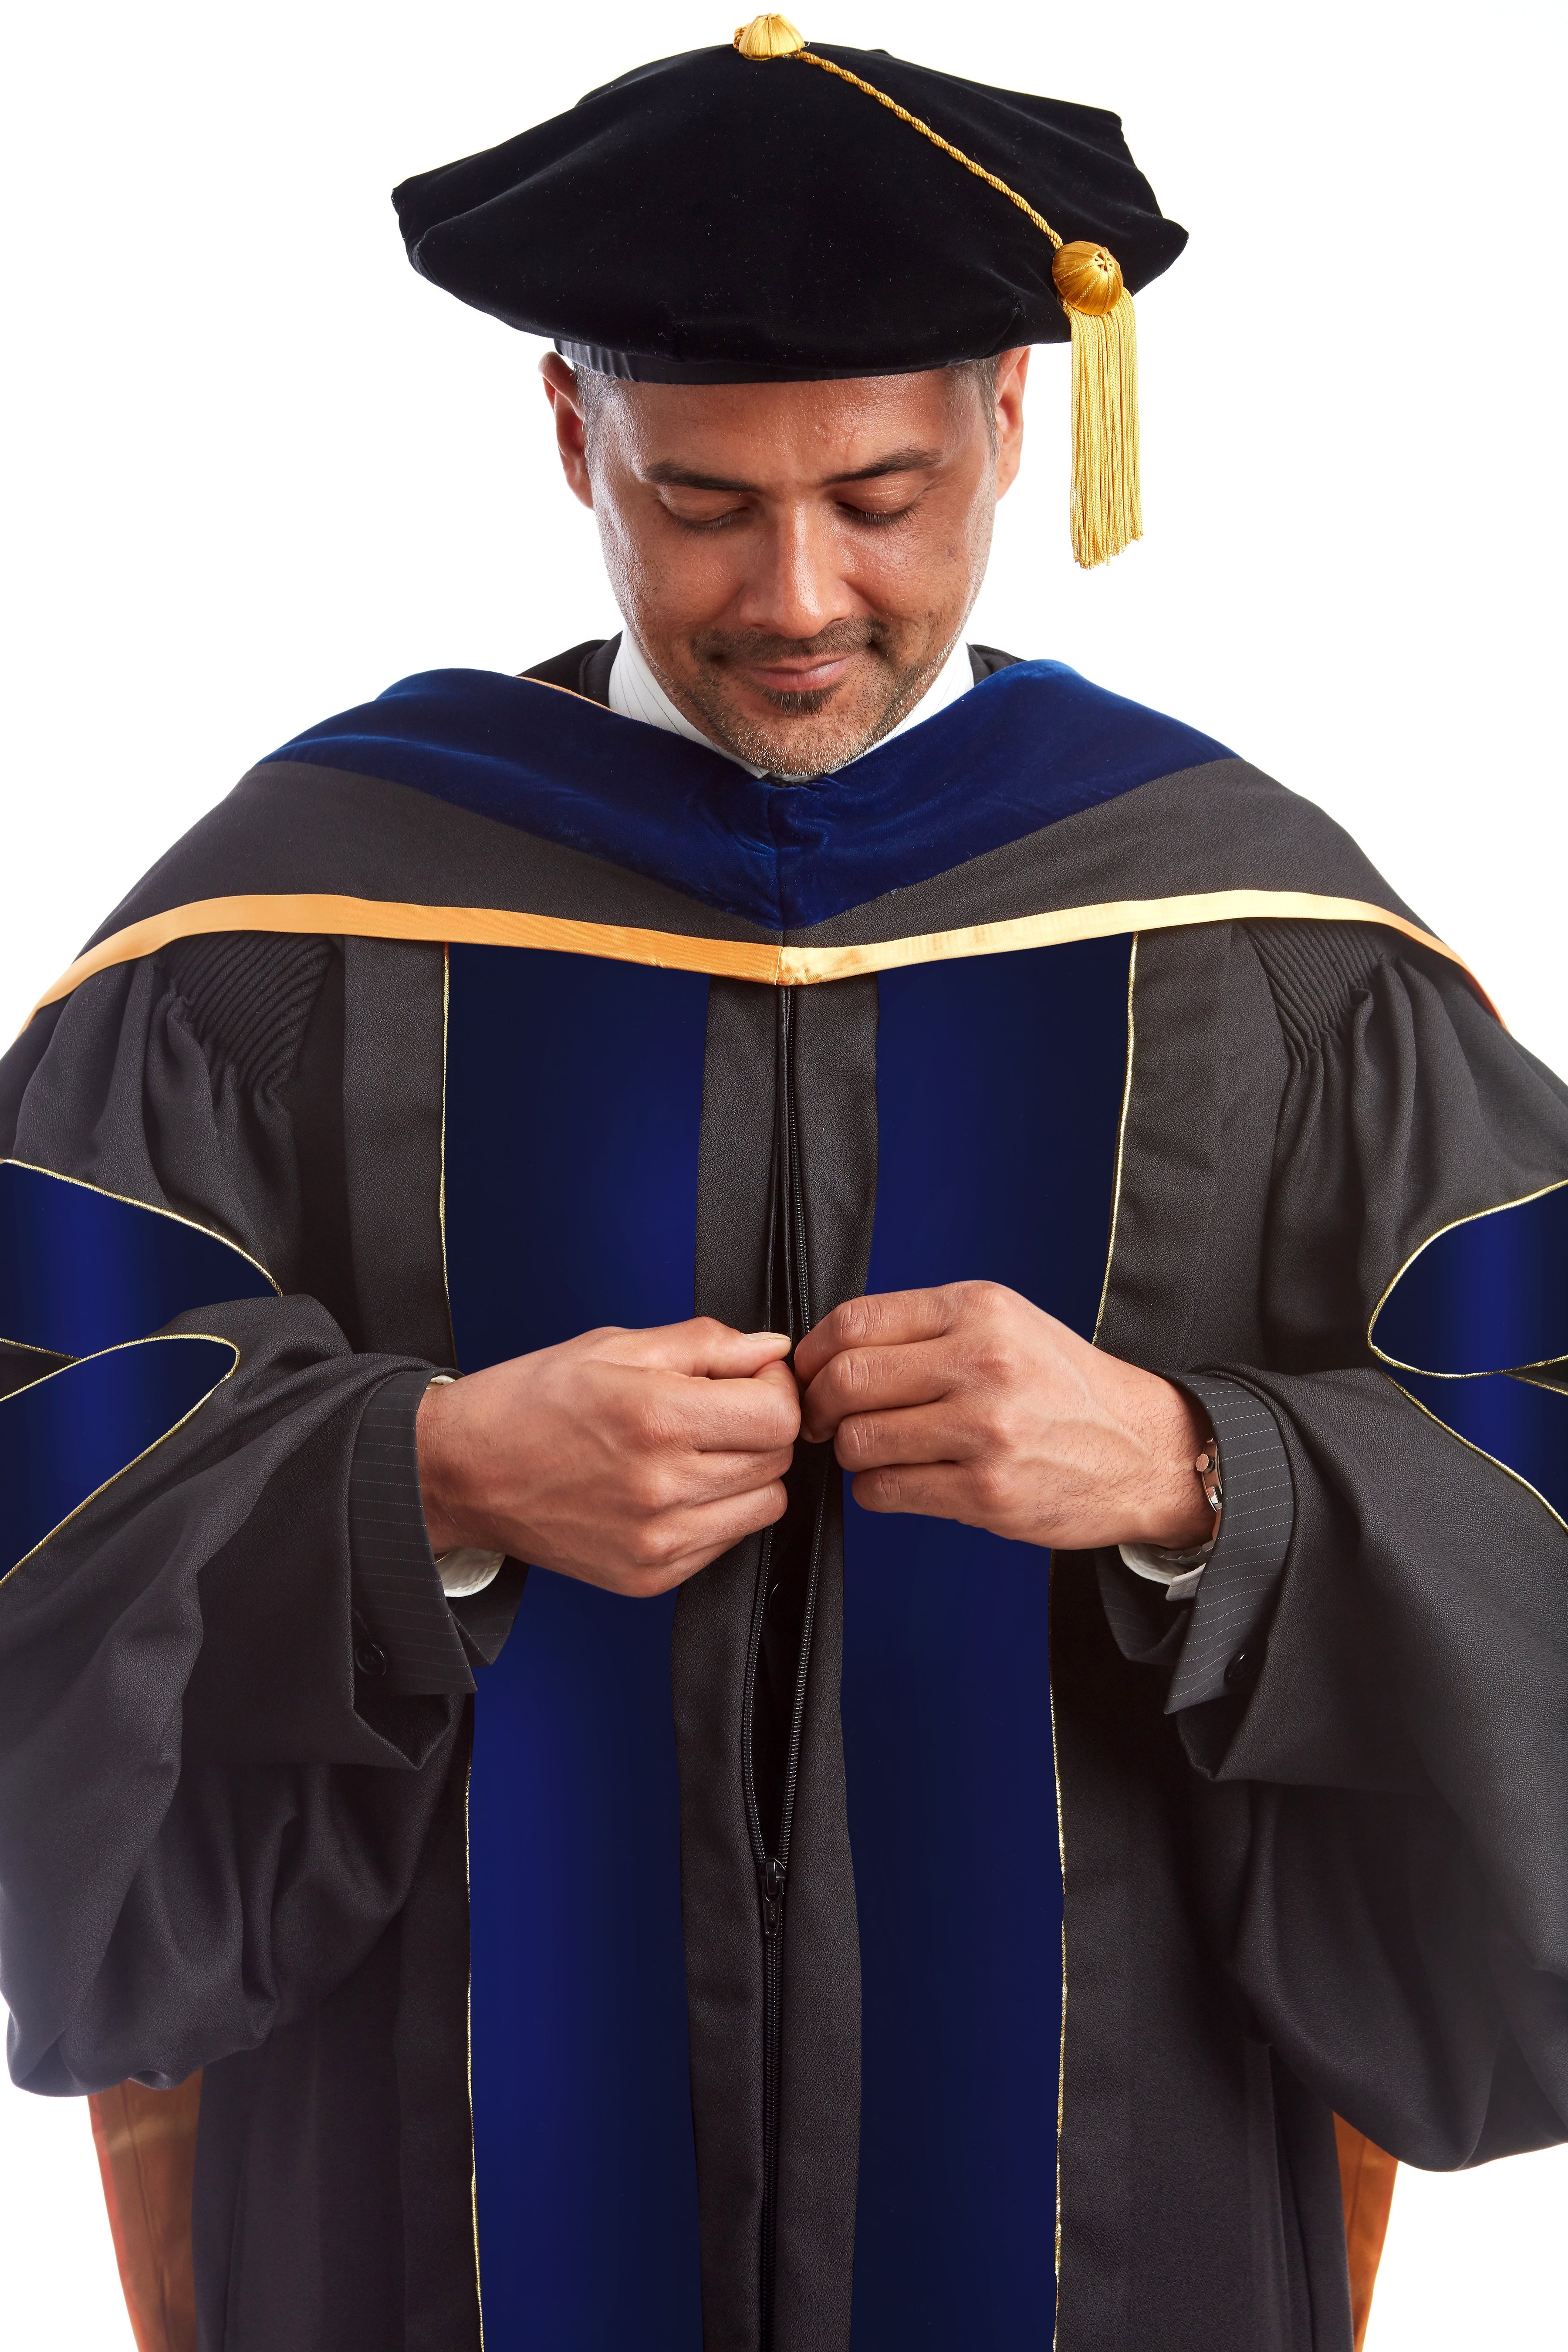 Premium PhD Regalia - Rental Keeper